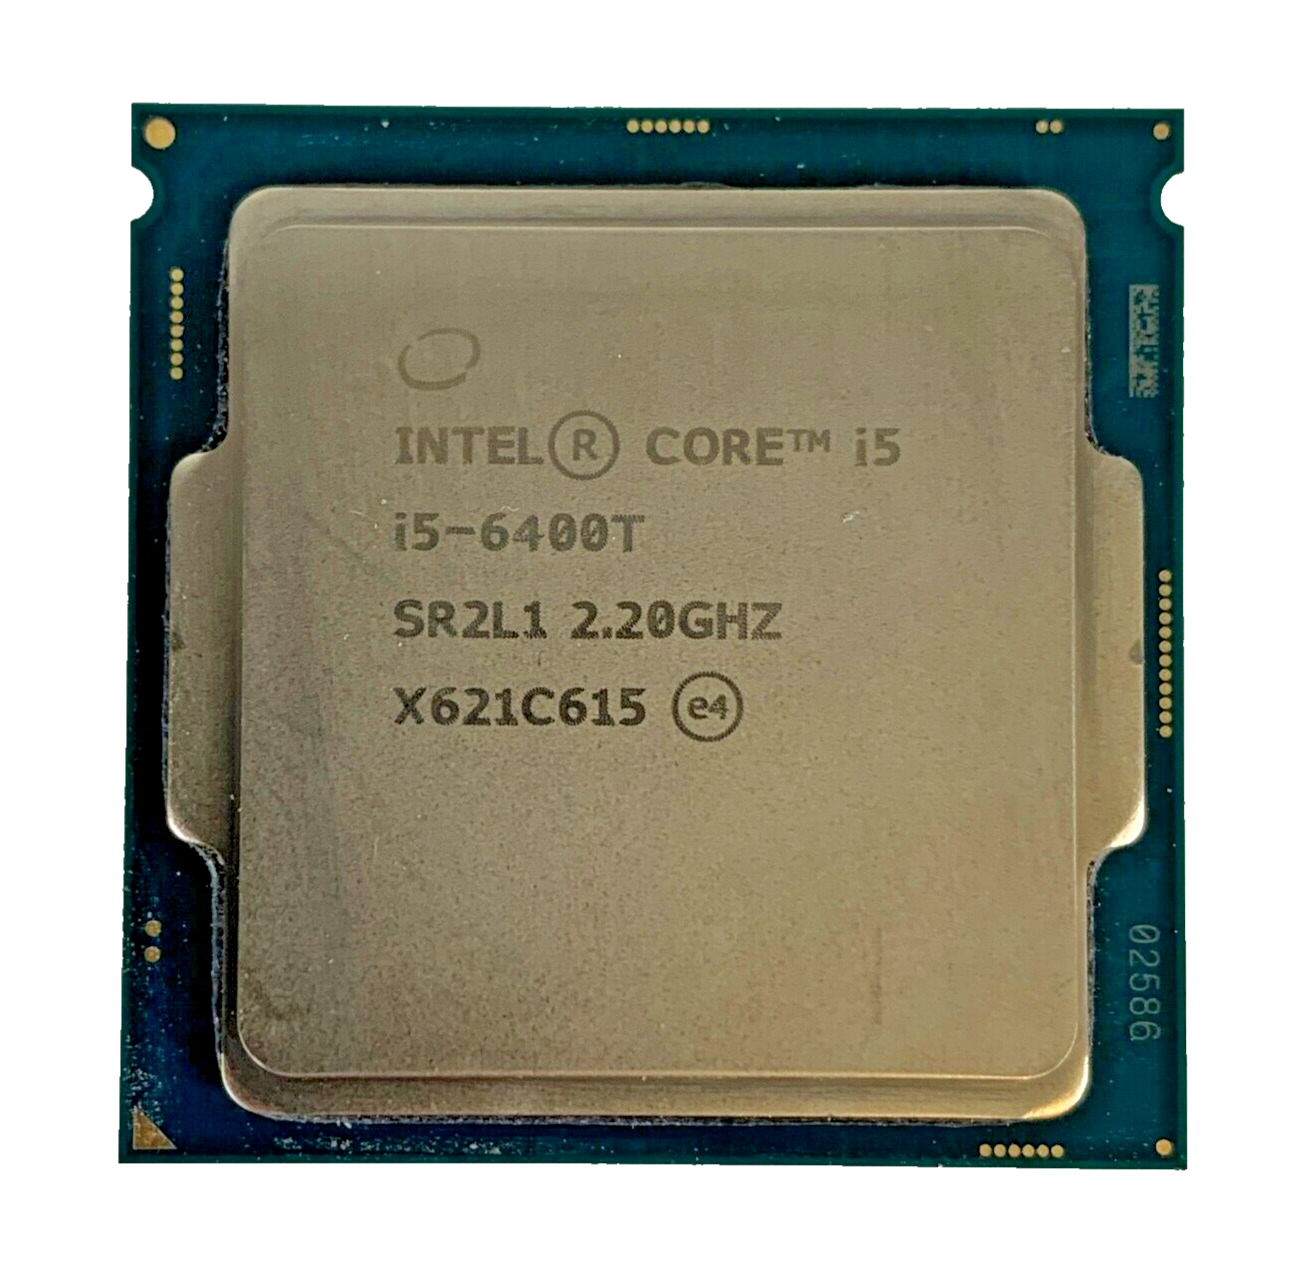 Intel Core I5-6400T 2.20GHz 6MB Socket 1151 CPU Processor - SR2L1